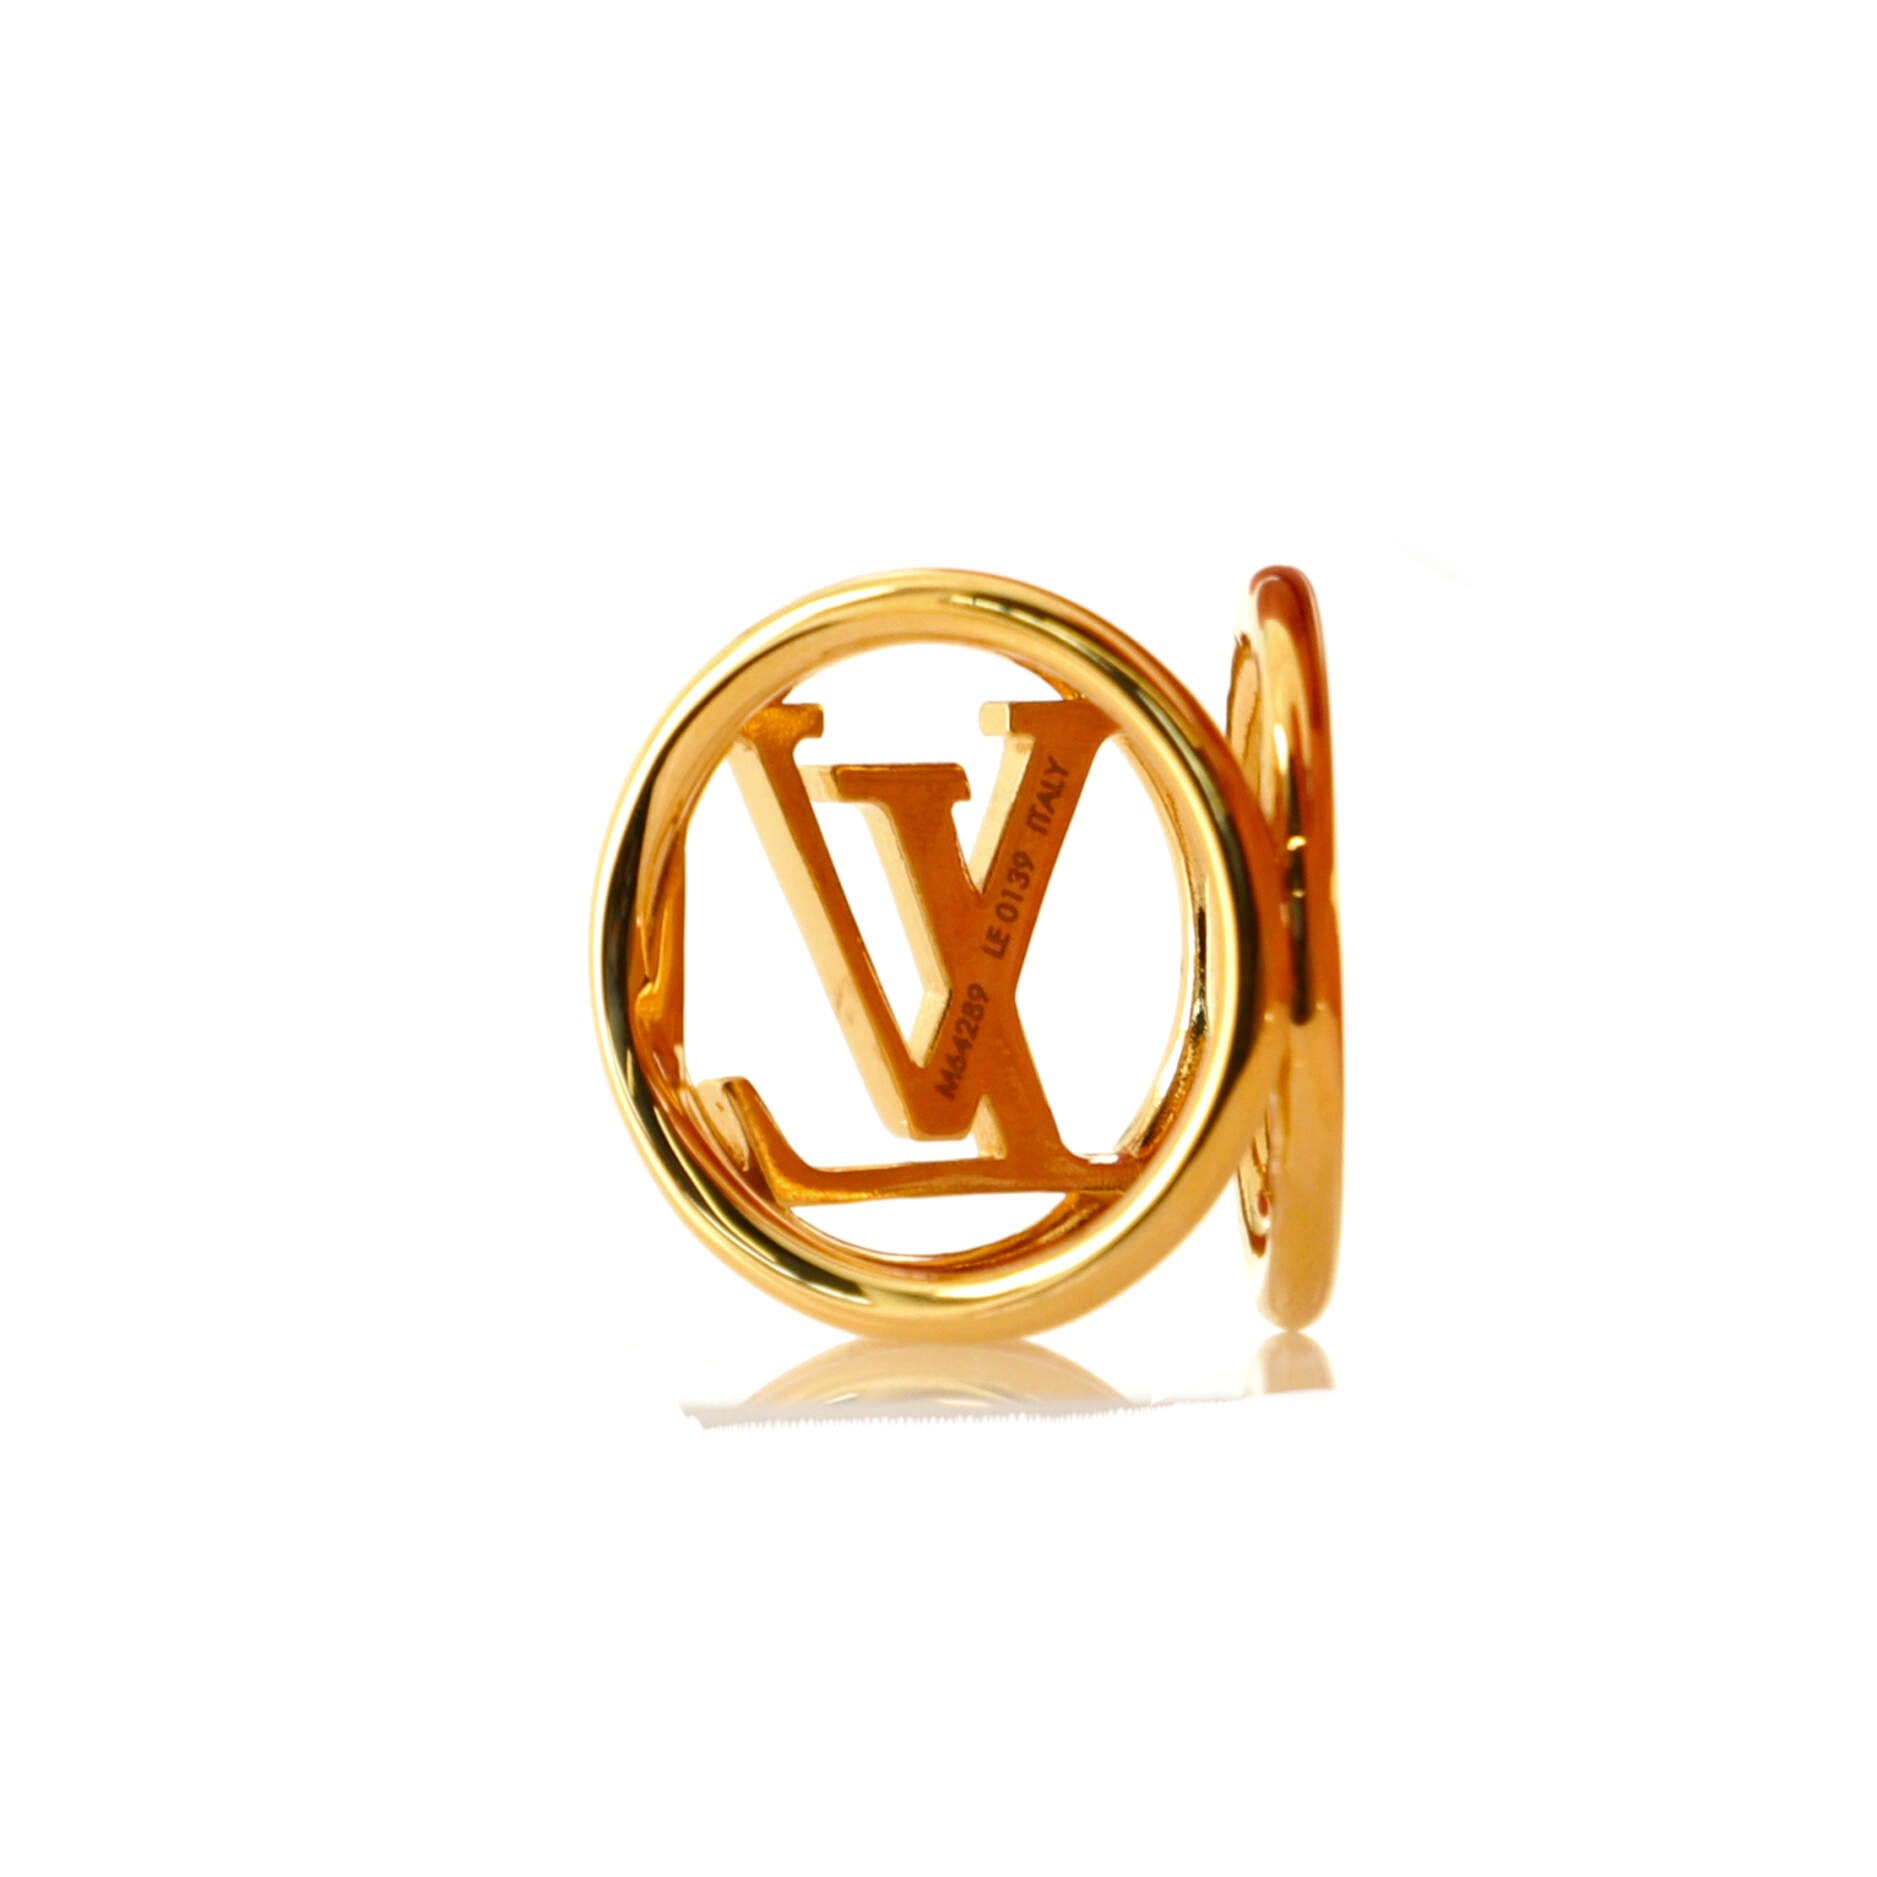 Louis Vuitton LOUIS VUITTON LV scarf muffler ring MP1665 gold